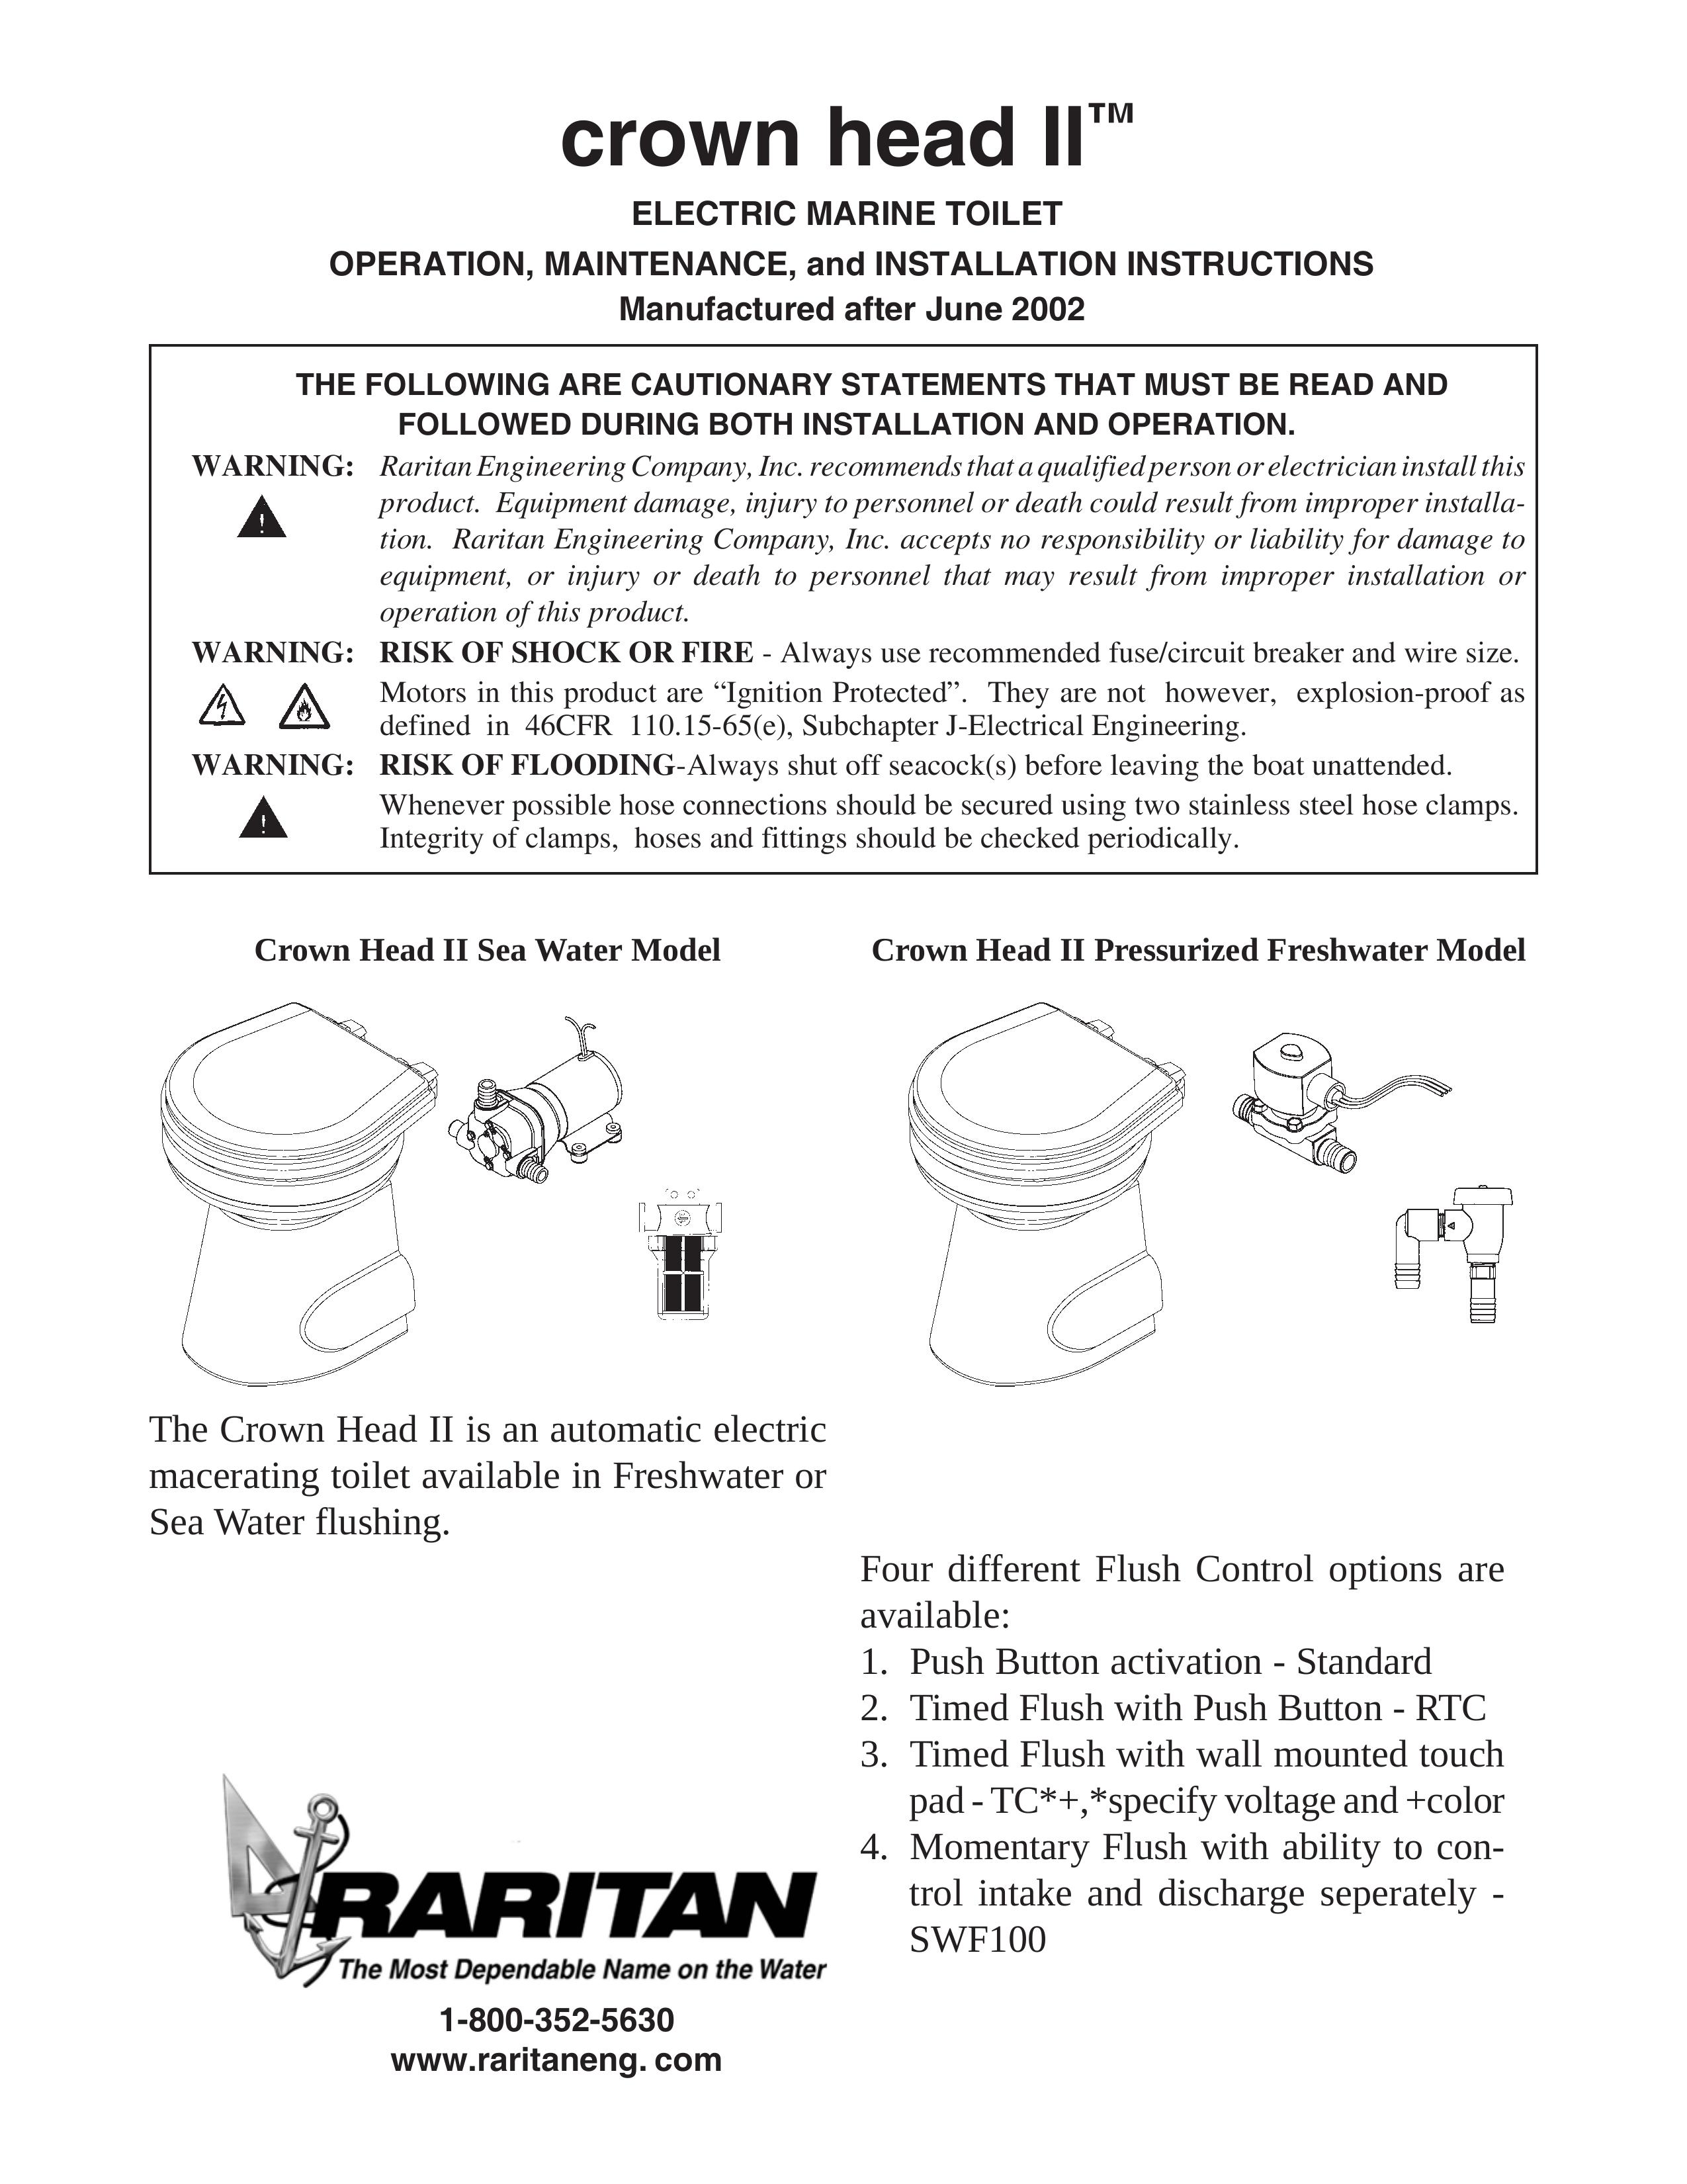 Raritan Engineering Crown Head II Marine Sanitation System User Manual